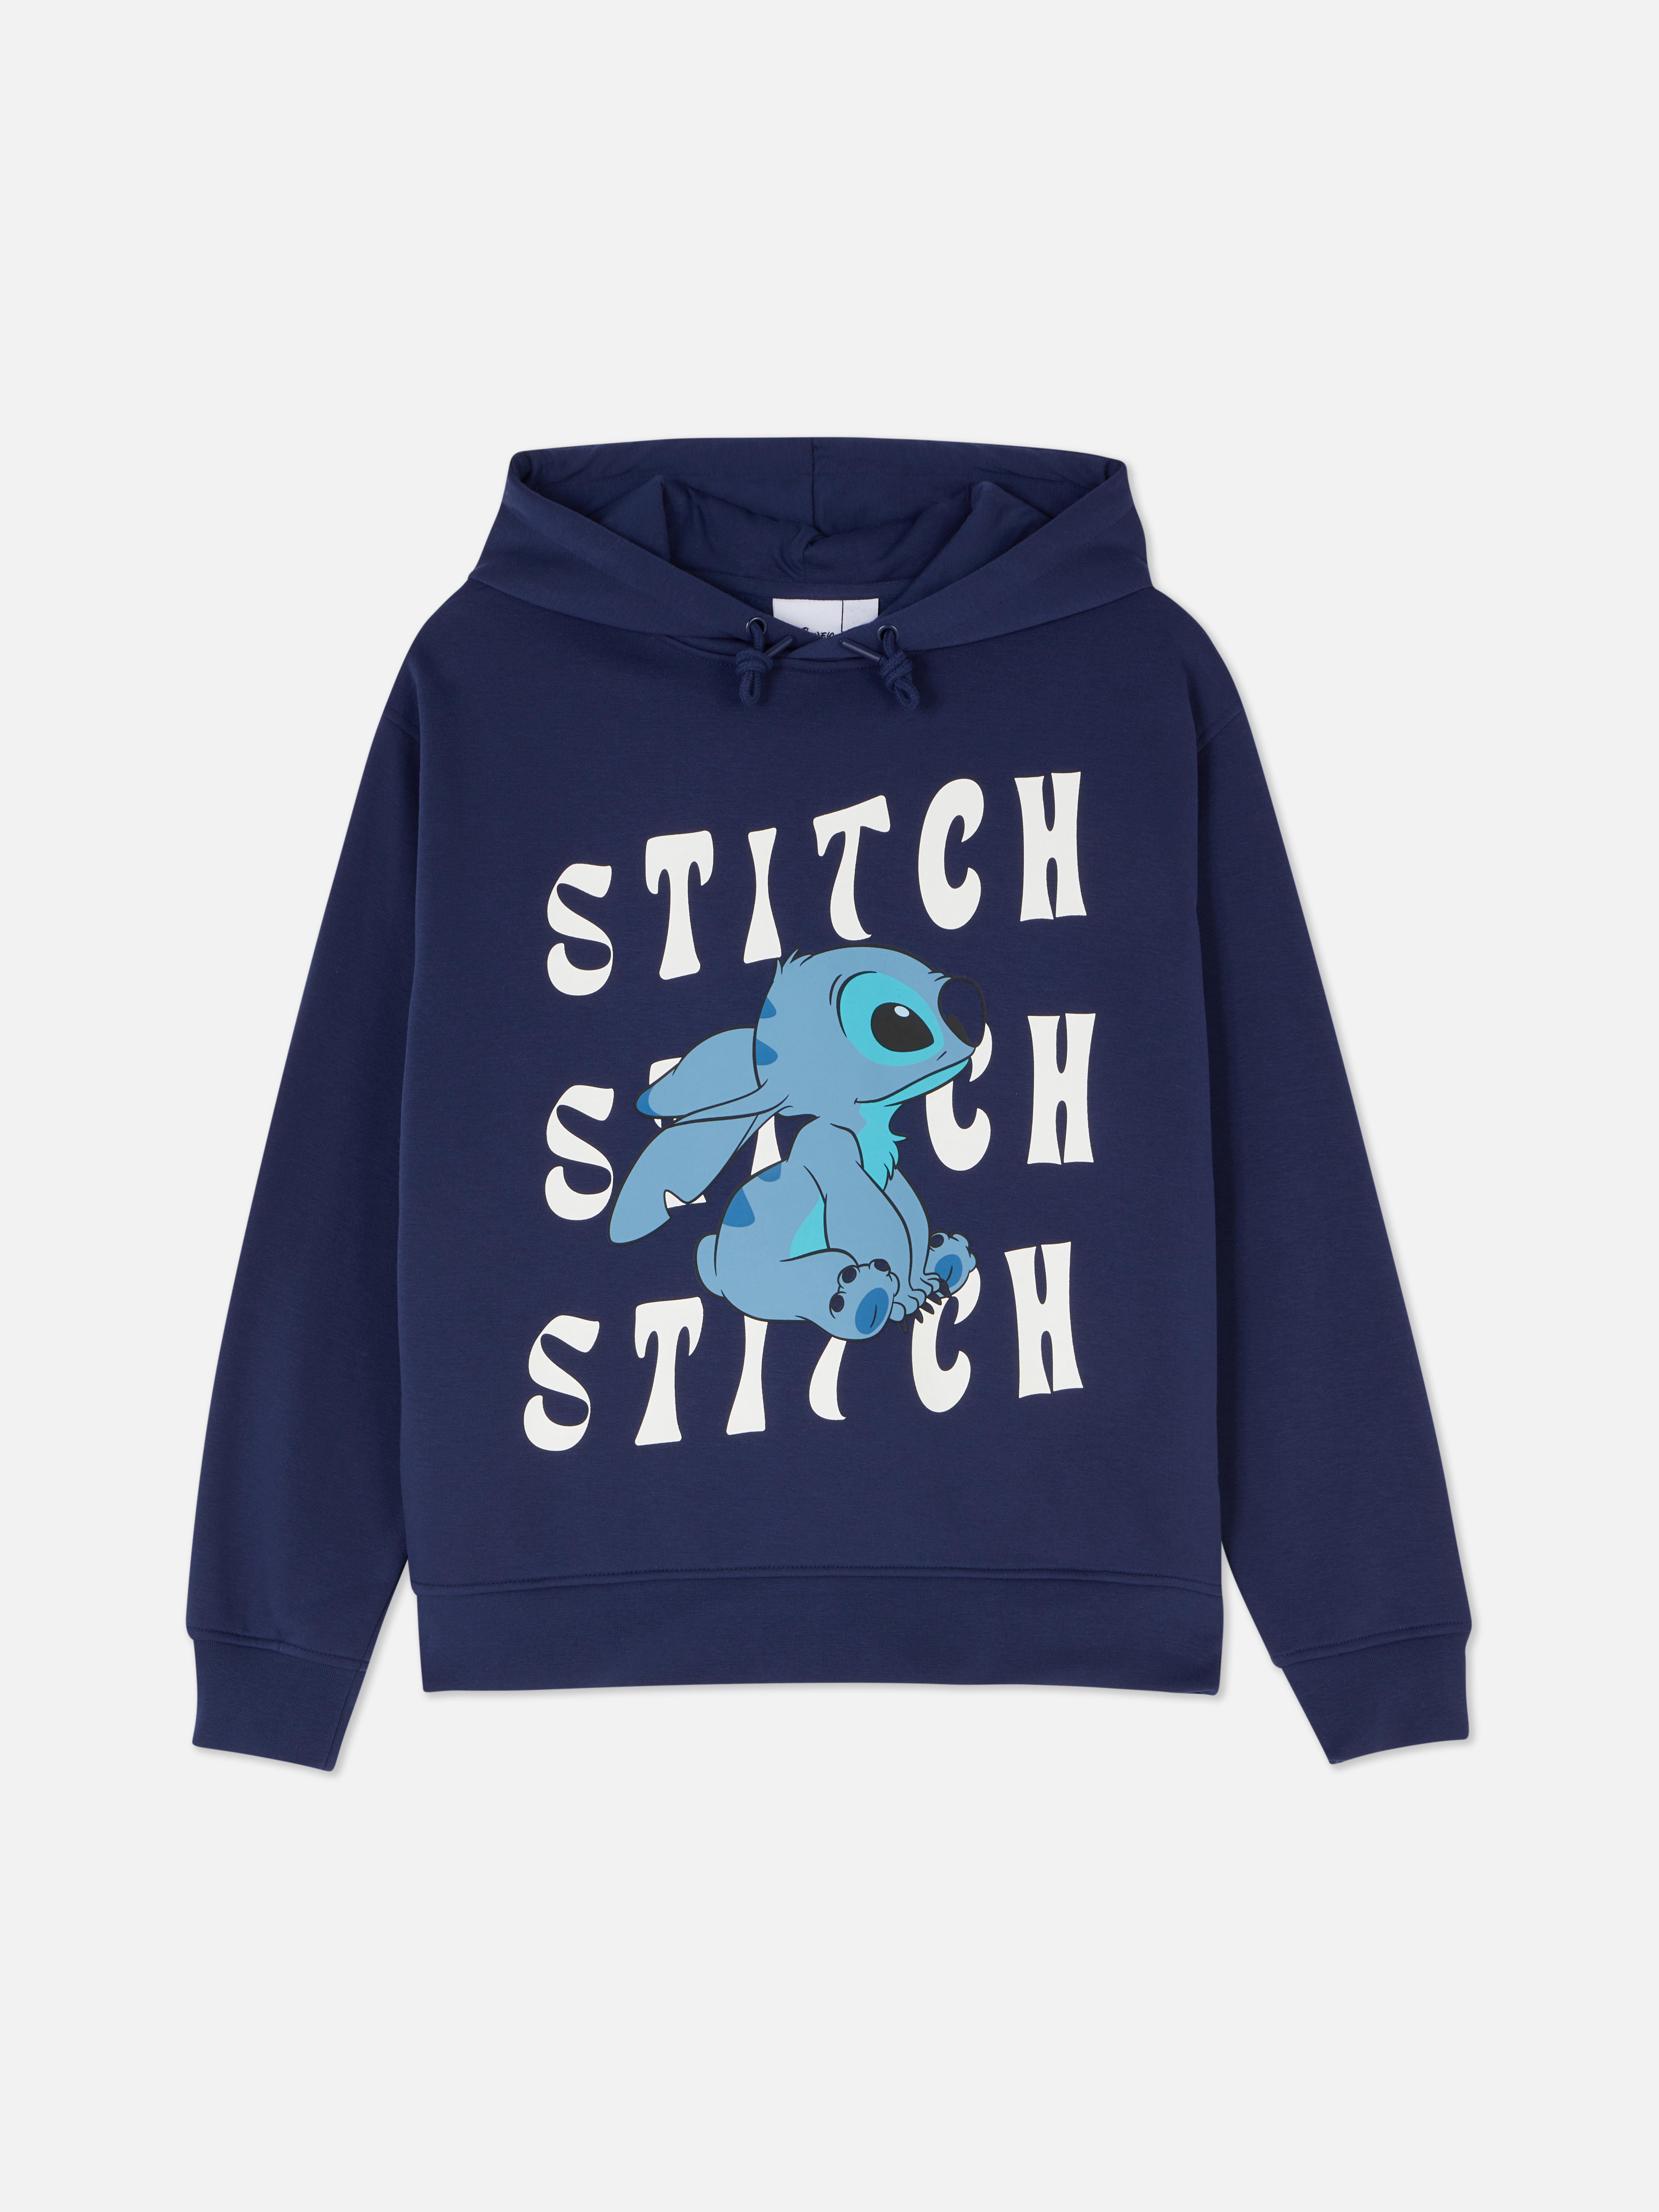 Sudadera Stitch azul oscuro Disney por solo 32,90€ –